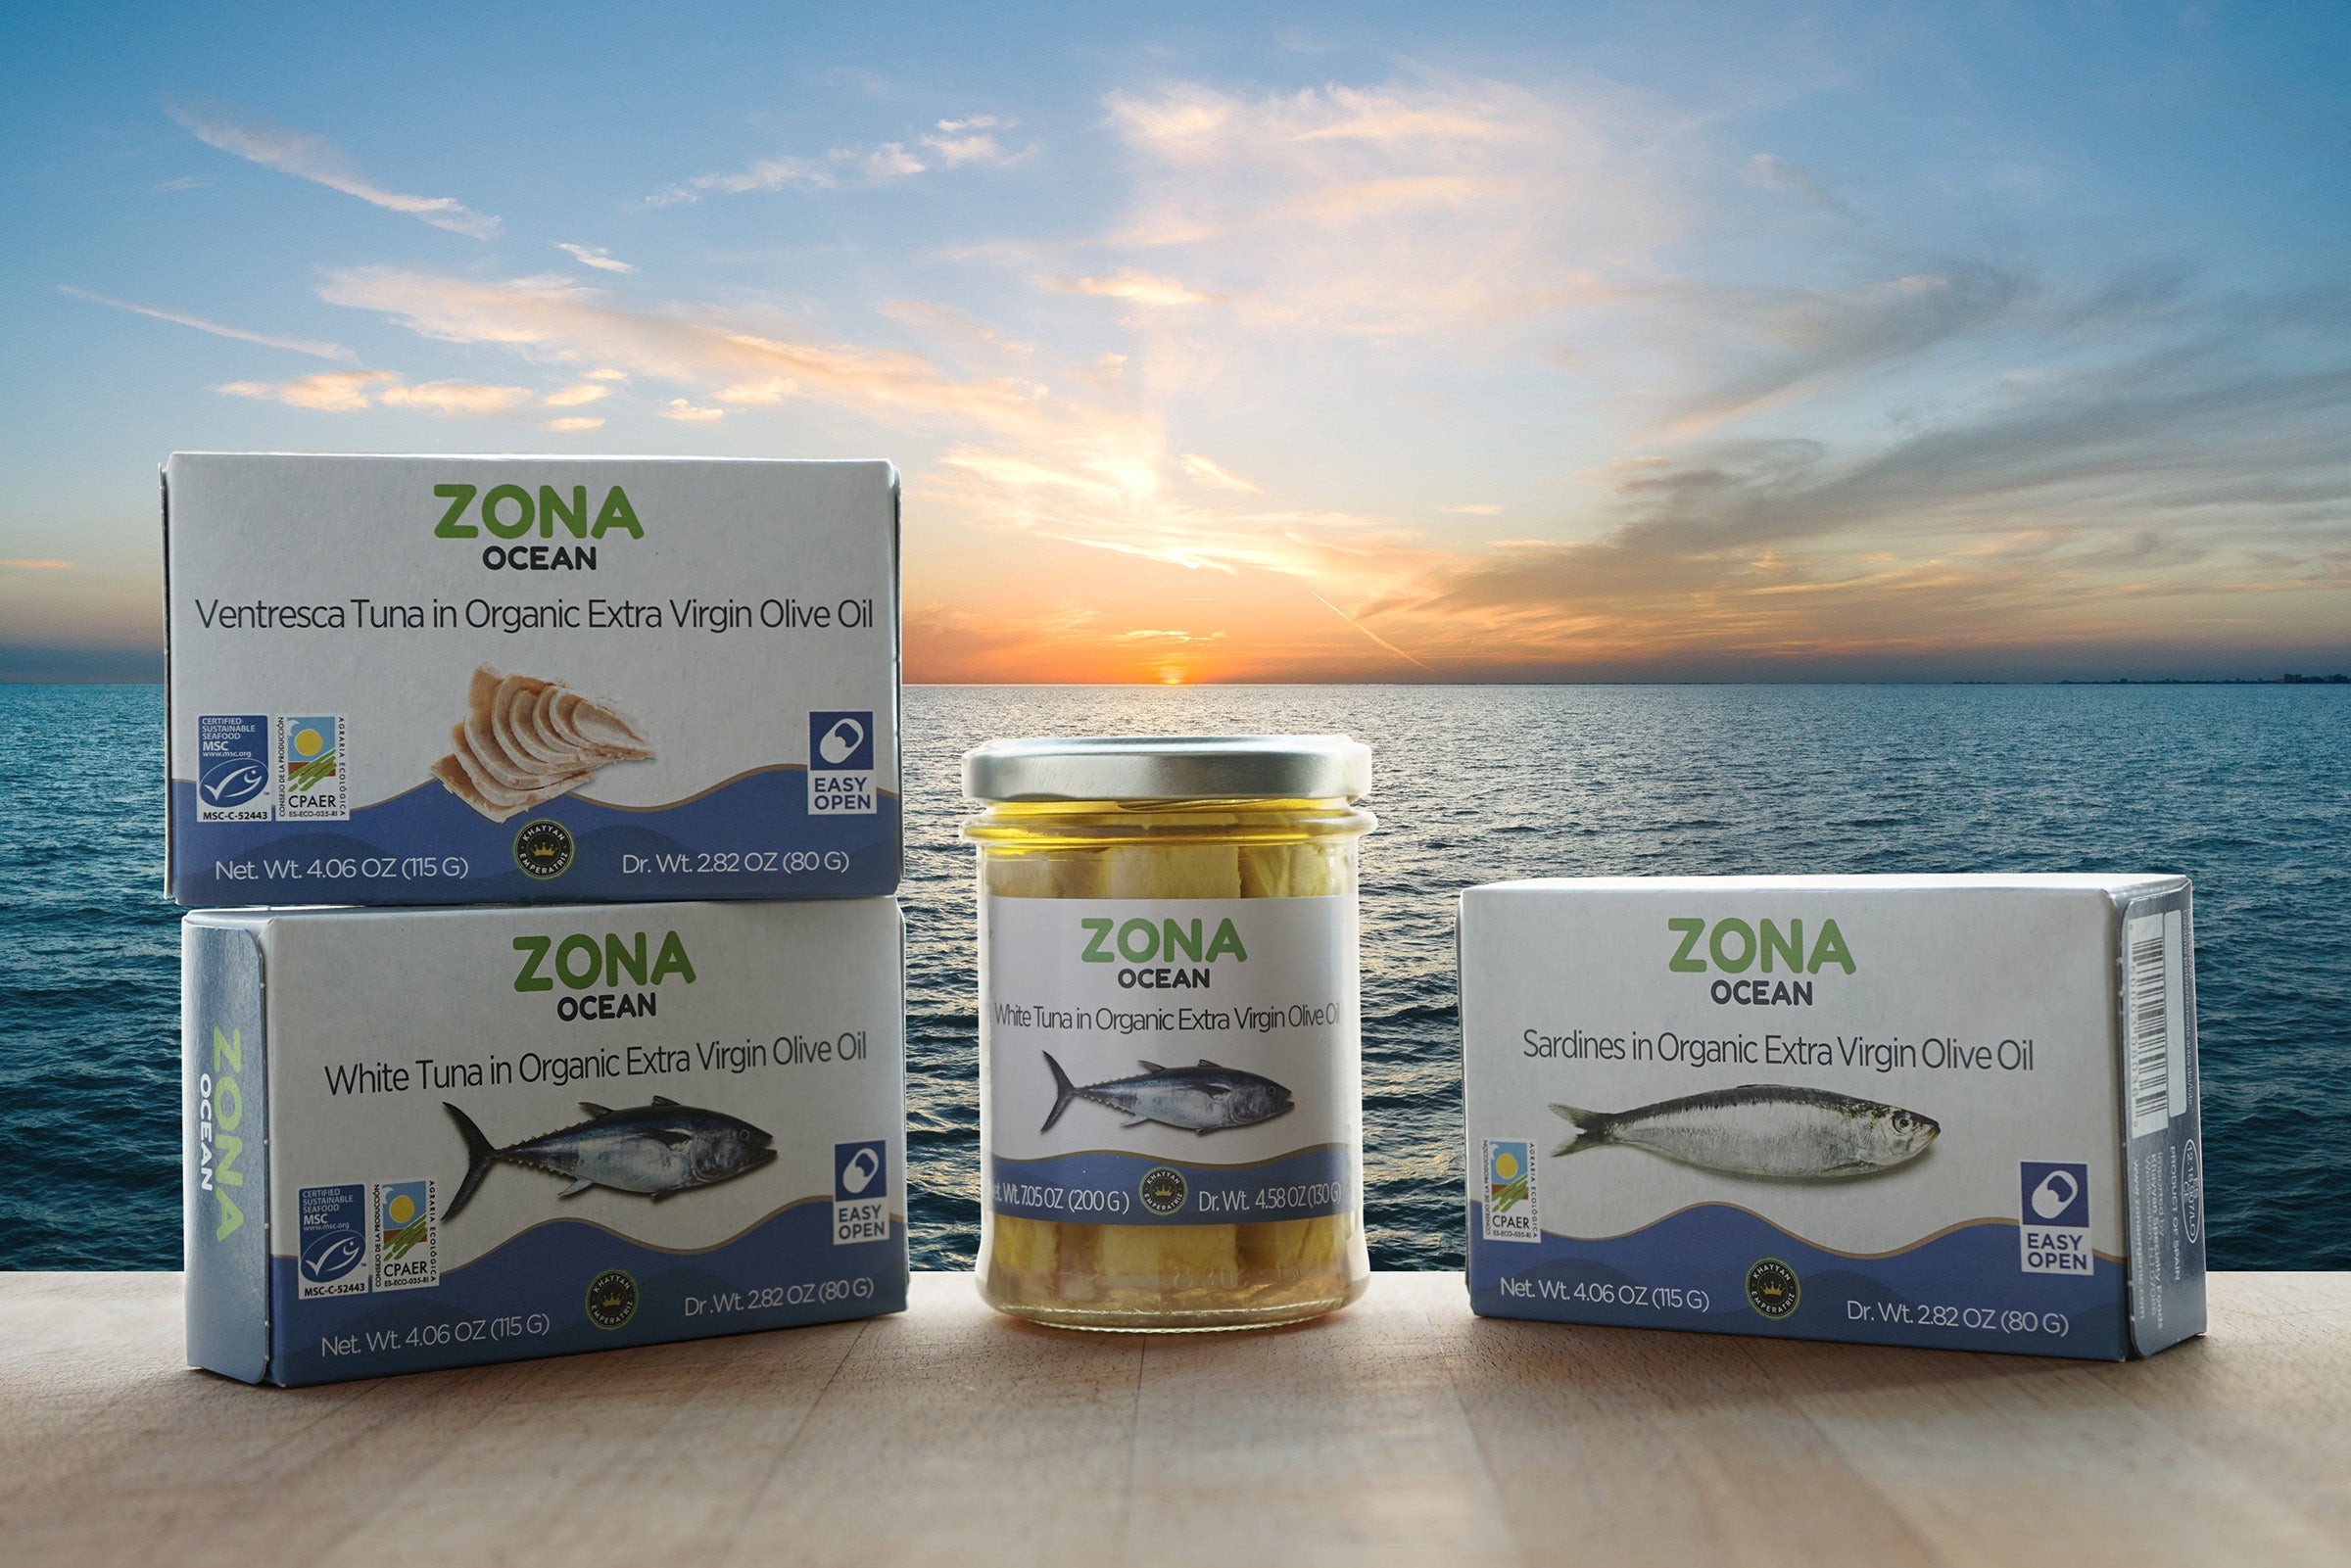 ZONA Ocean and keto diet